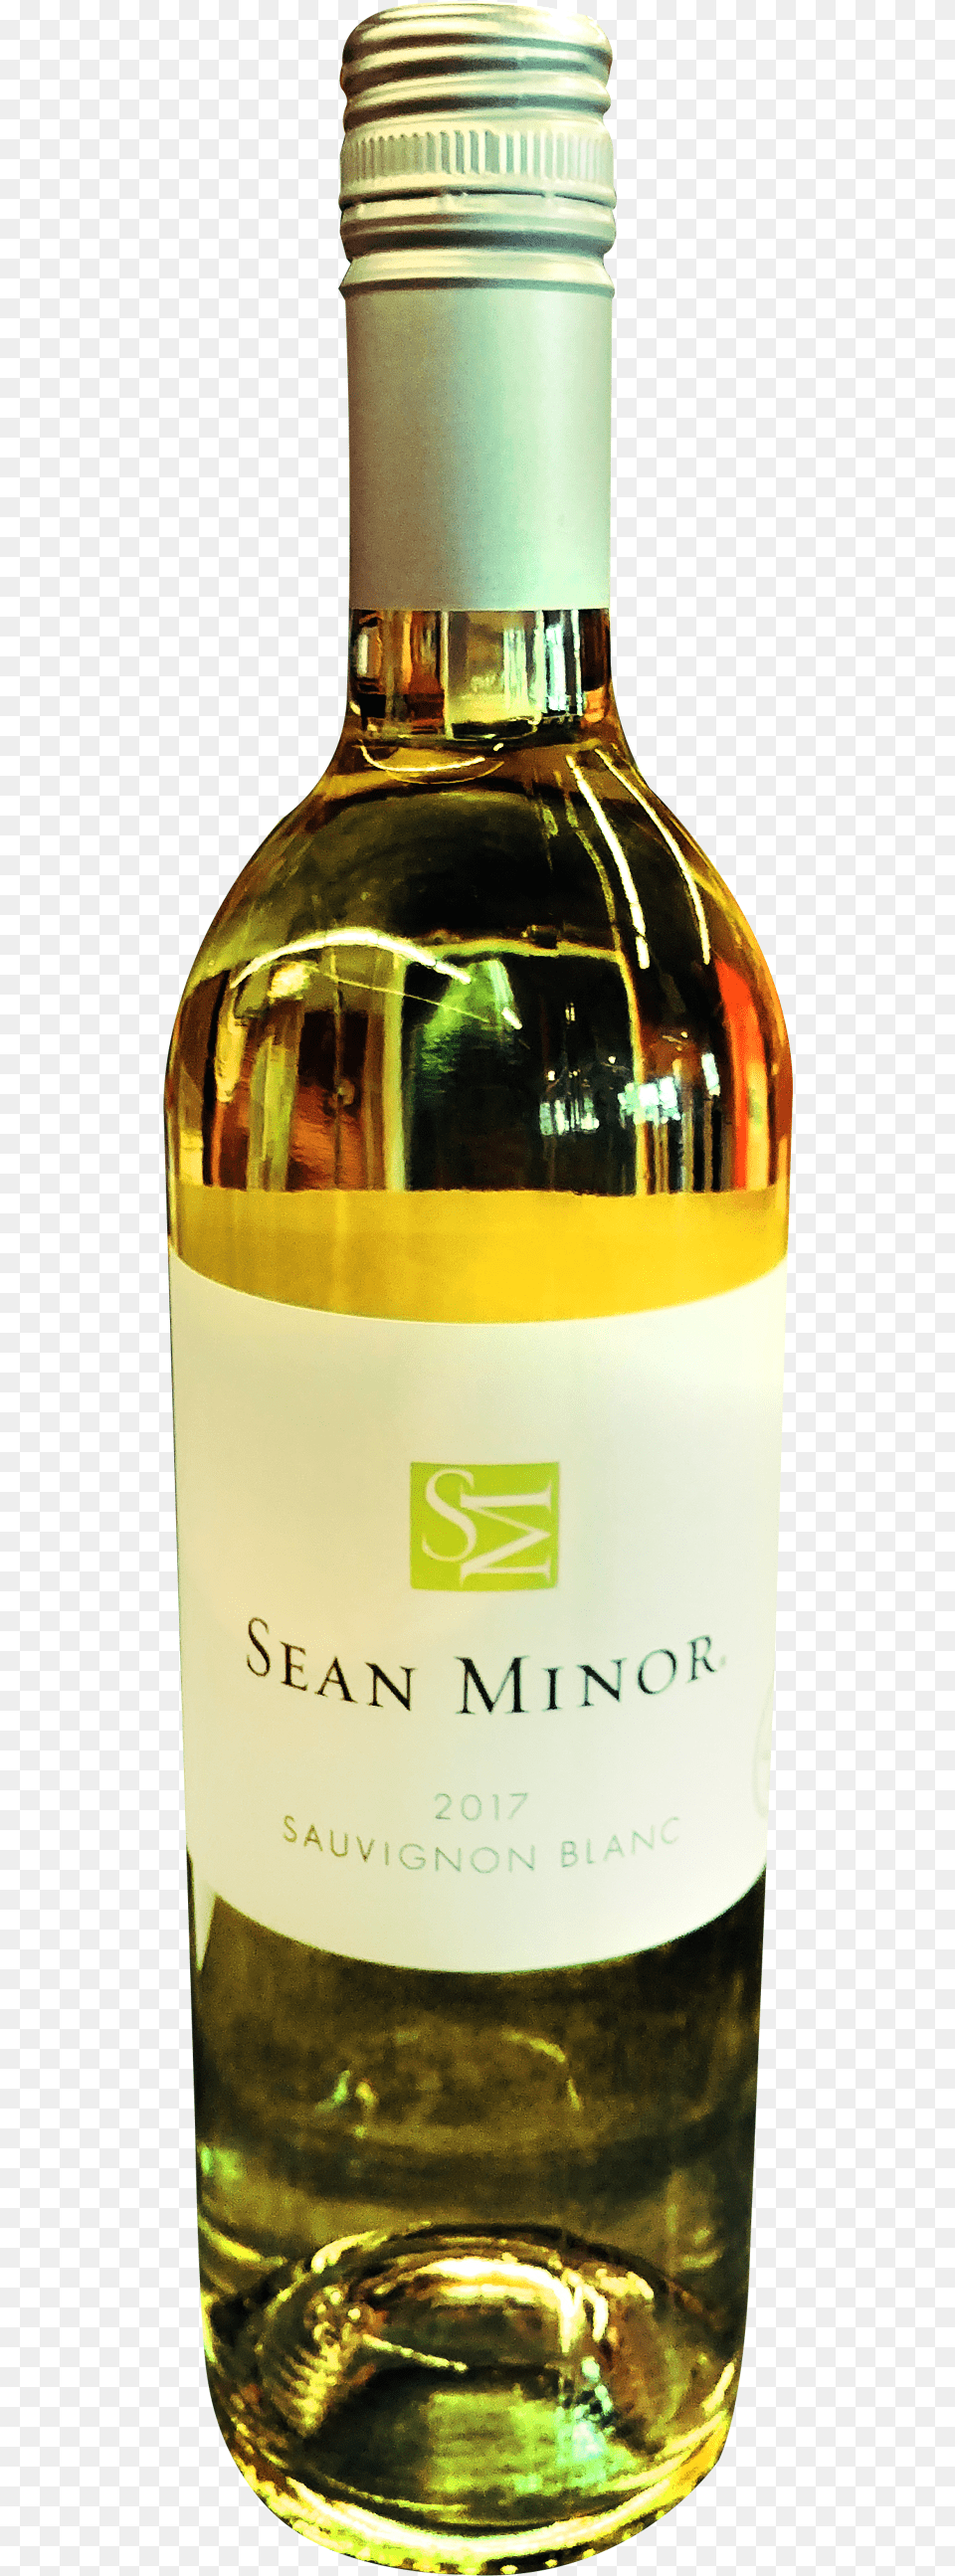 Sean Minor Glass Bottle, Alcohol, Beverage, Liquor, Wine Free Png Download